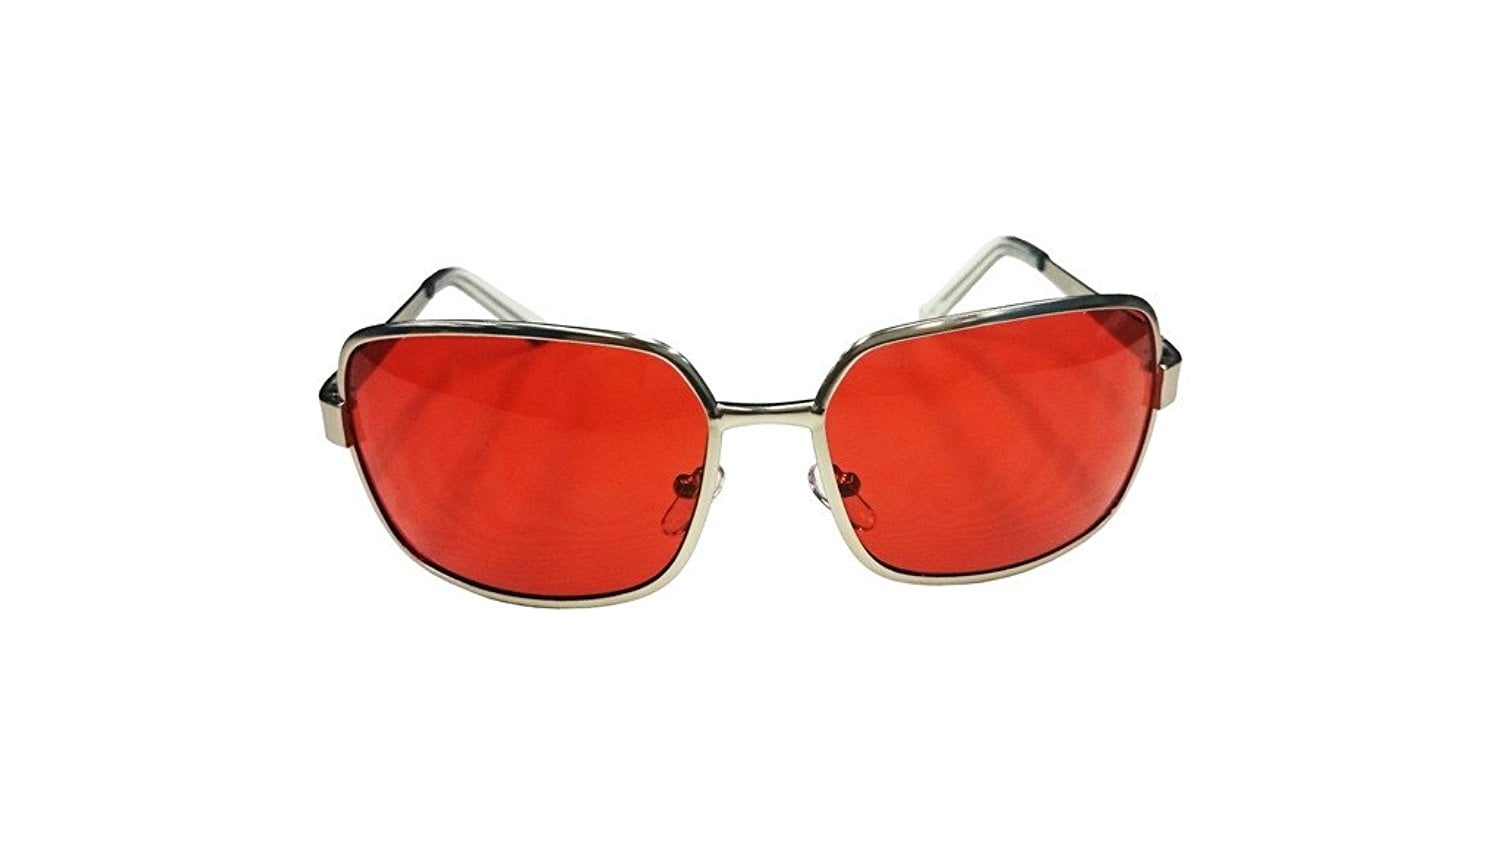 Blockers \ Fight Soap Salesman Red Sunglasses Amazon.com: ladies Red sungla...